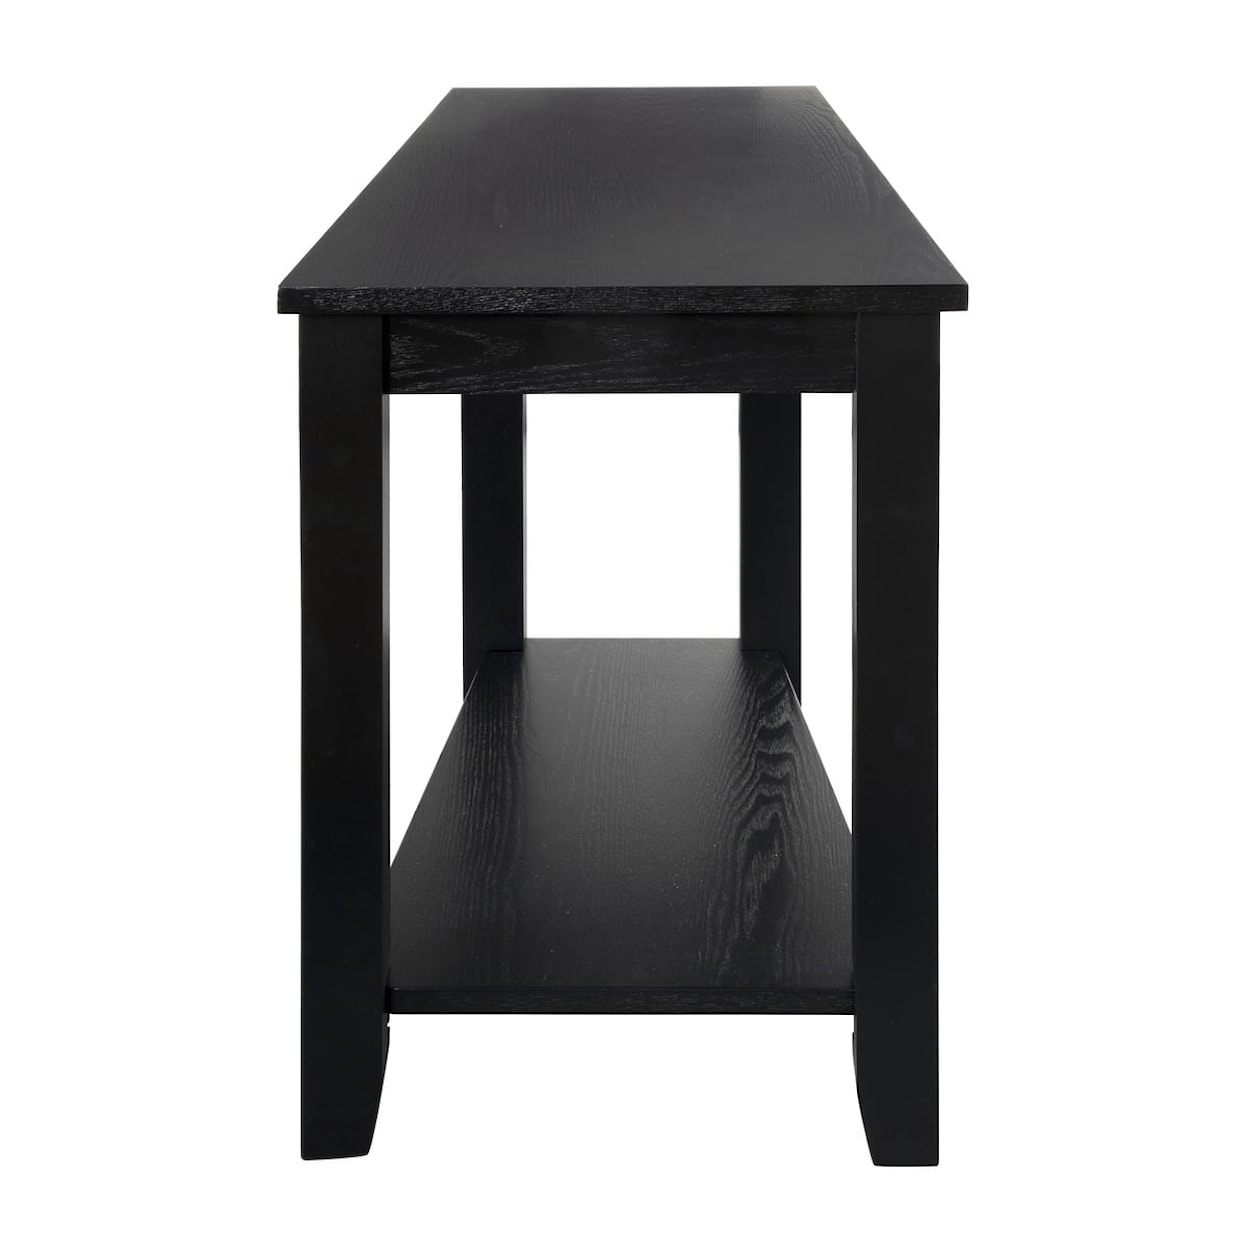 Homelegance Furniture Elwell Chairside Table